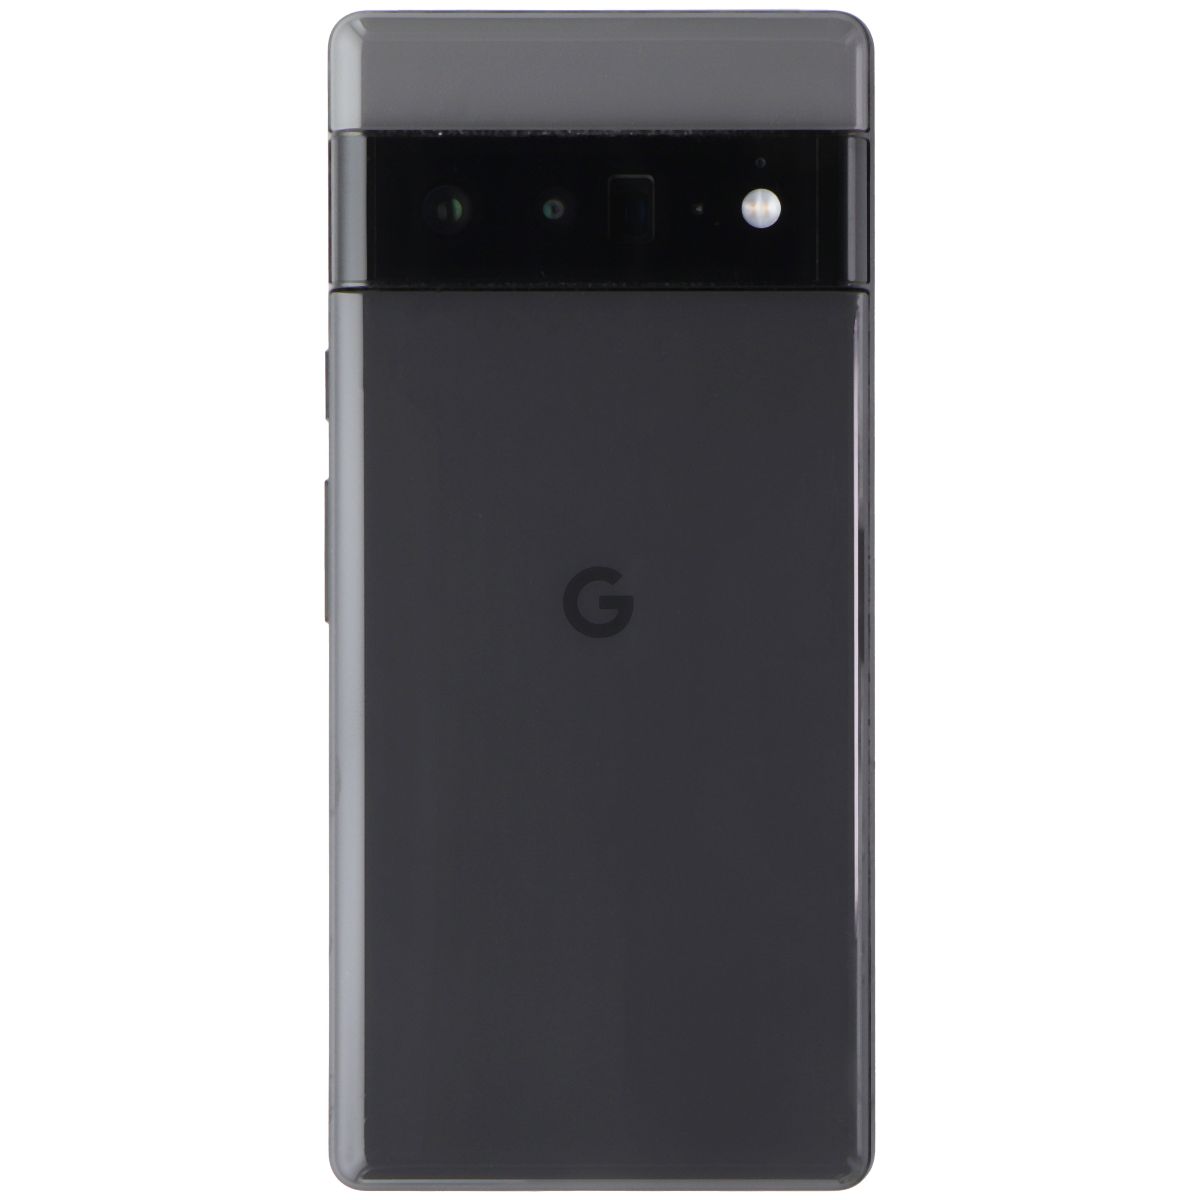 Google Pixel 6 Pro (6.7-in) G8VOU Unlocked - 128GB/Black *BAD Prox Sensor Cell Phones & Smartphones Google    - Simple Cell Bulk Wholesale Pricing - USA Seller